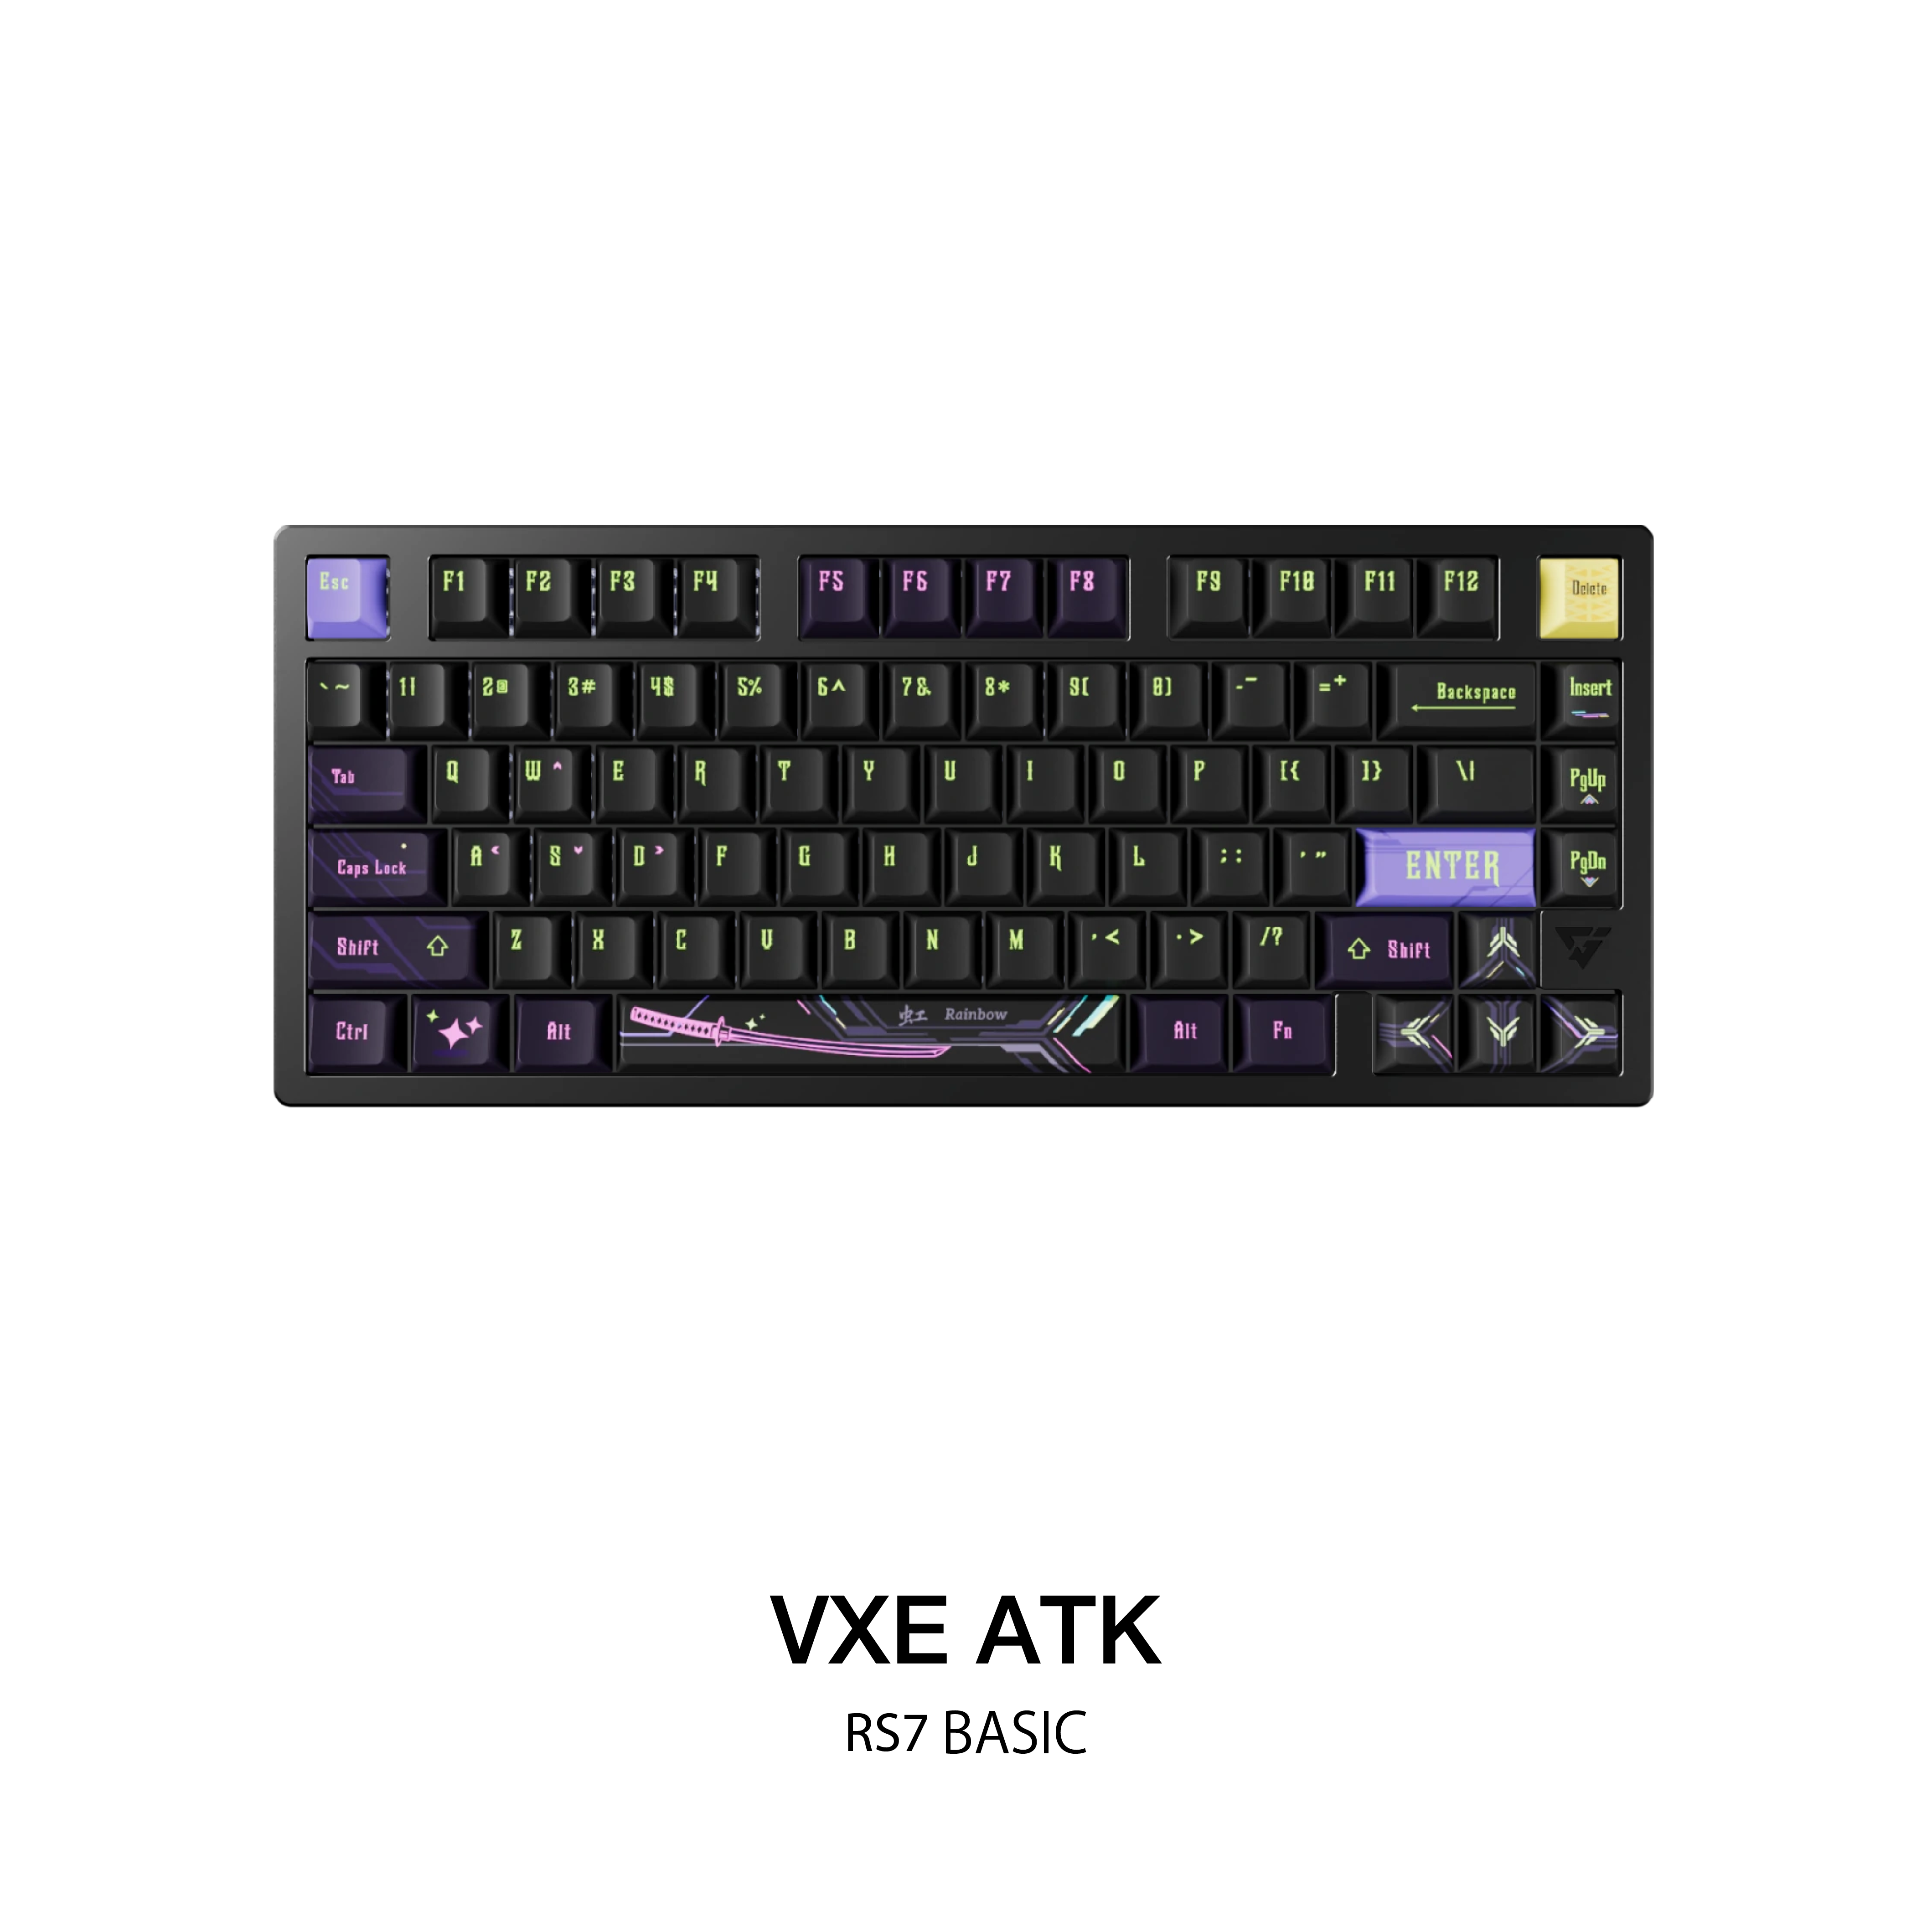 VXE ATK RS7 BASIC